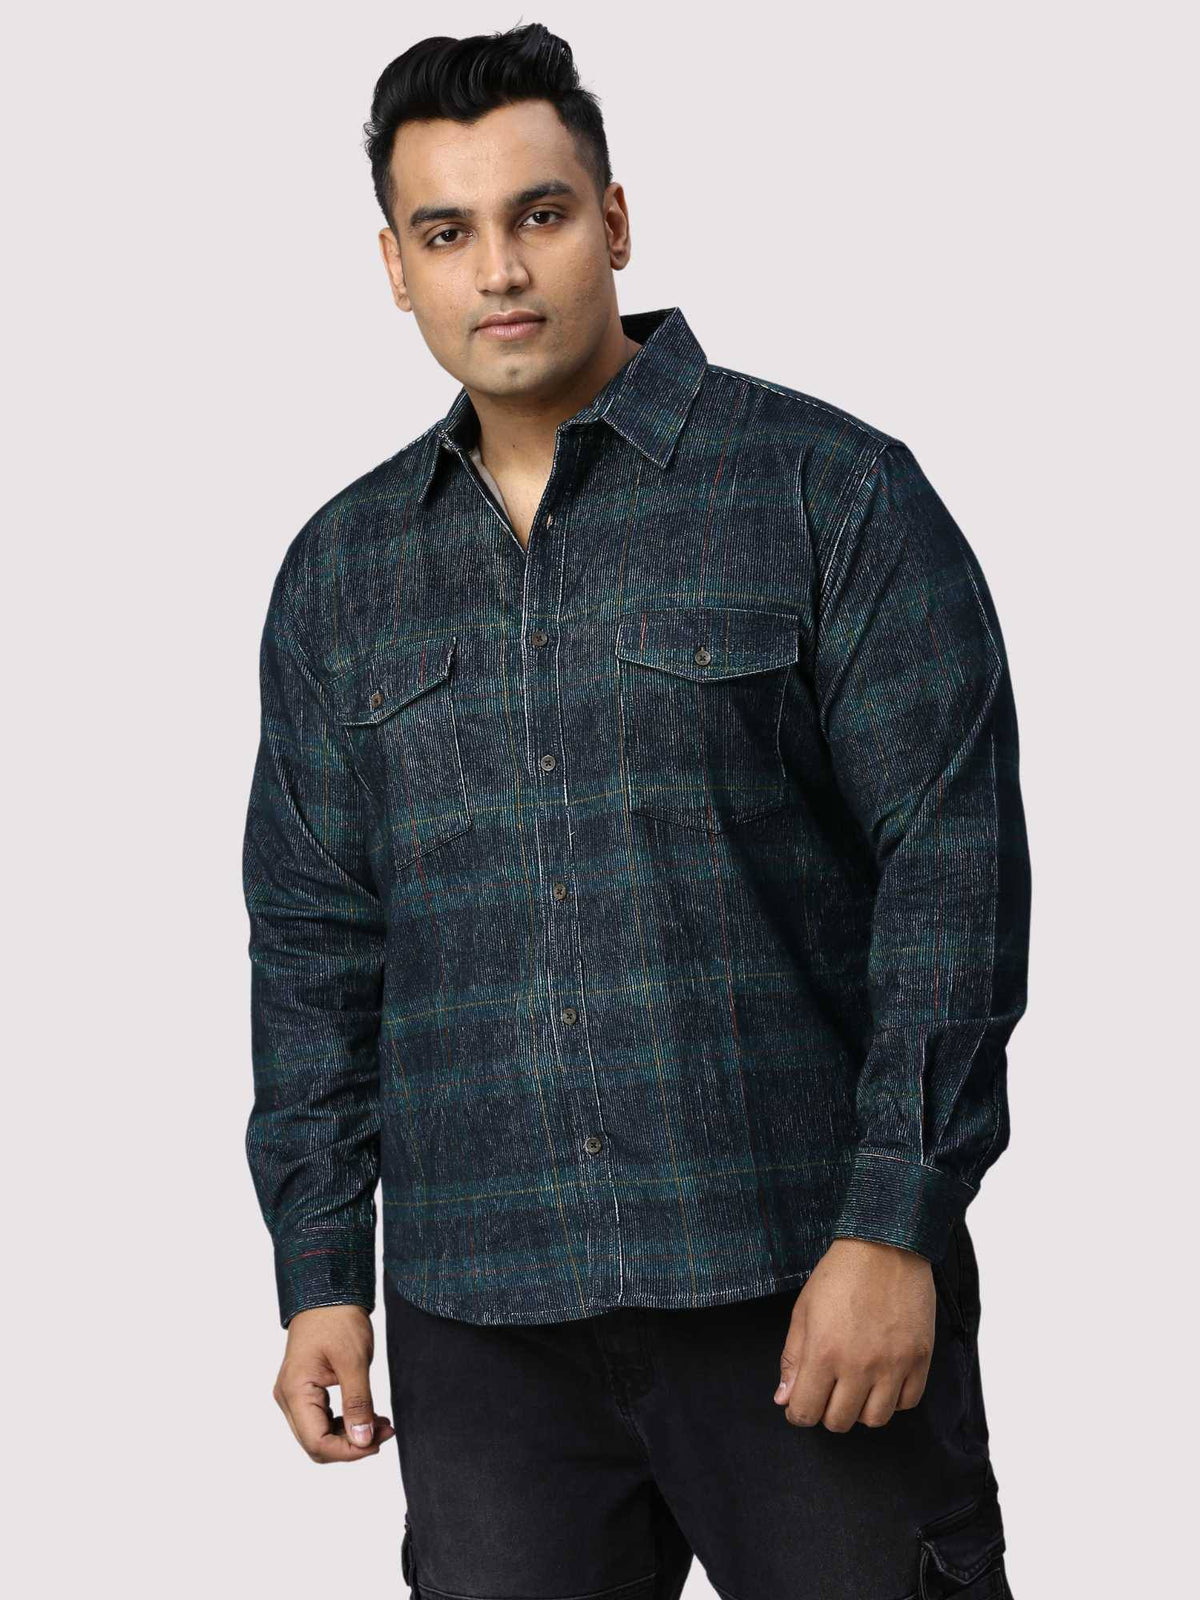 Black & Blue Checkered Double Pocket Full Shirt Men's Plus Size - Guniaa Fashions